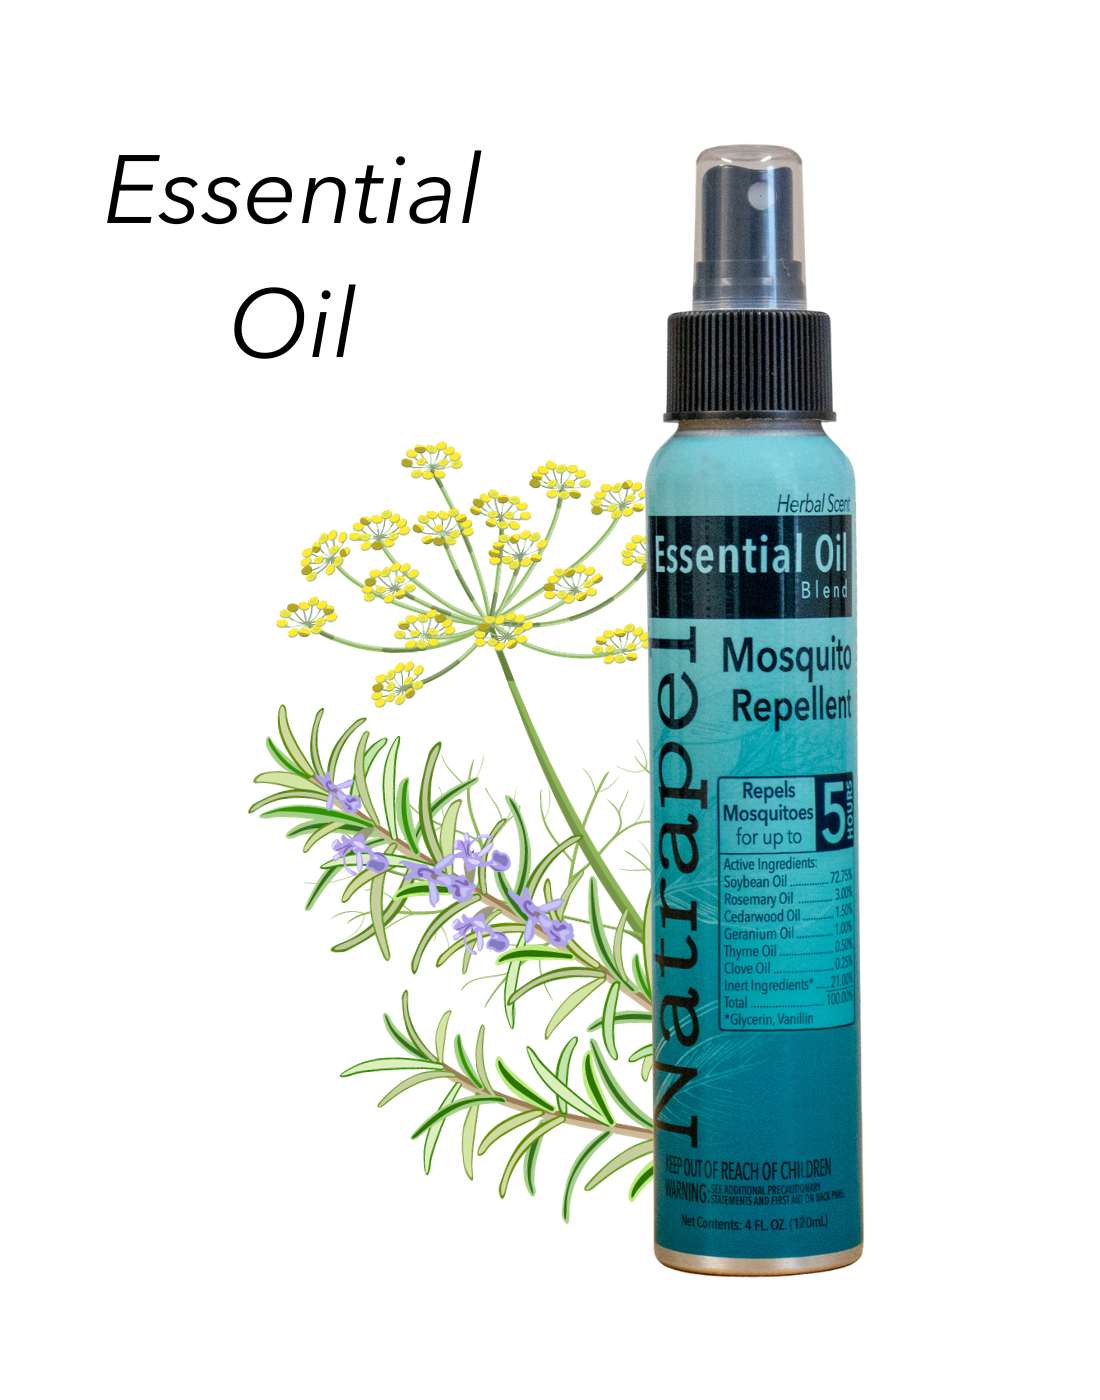 Essential Oil, Natrapel Essential Oil Repellent 4 oz. pictured over essential oil plants